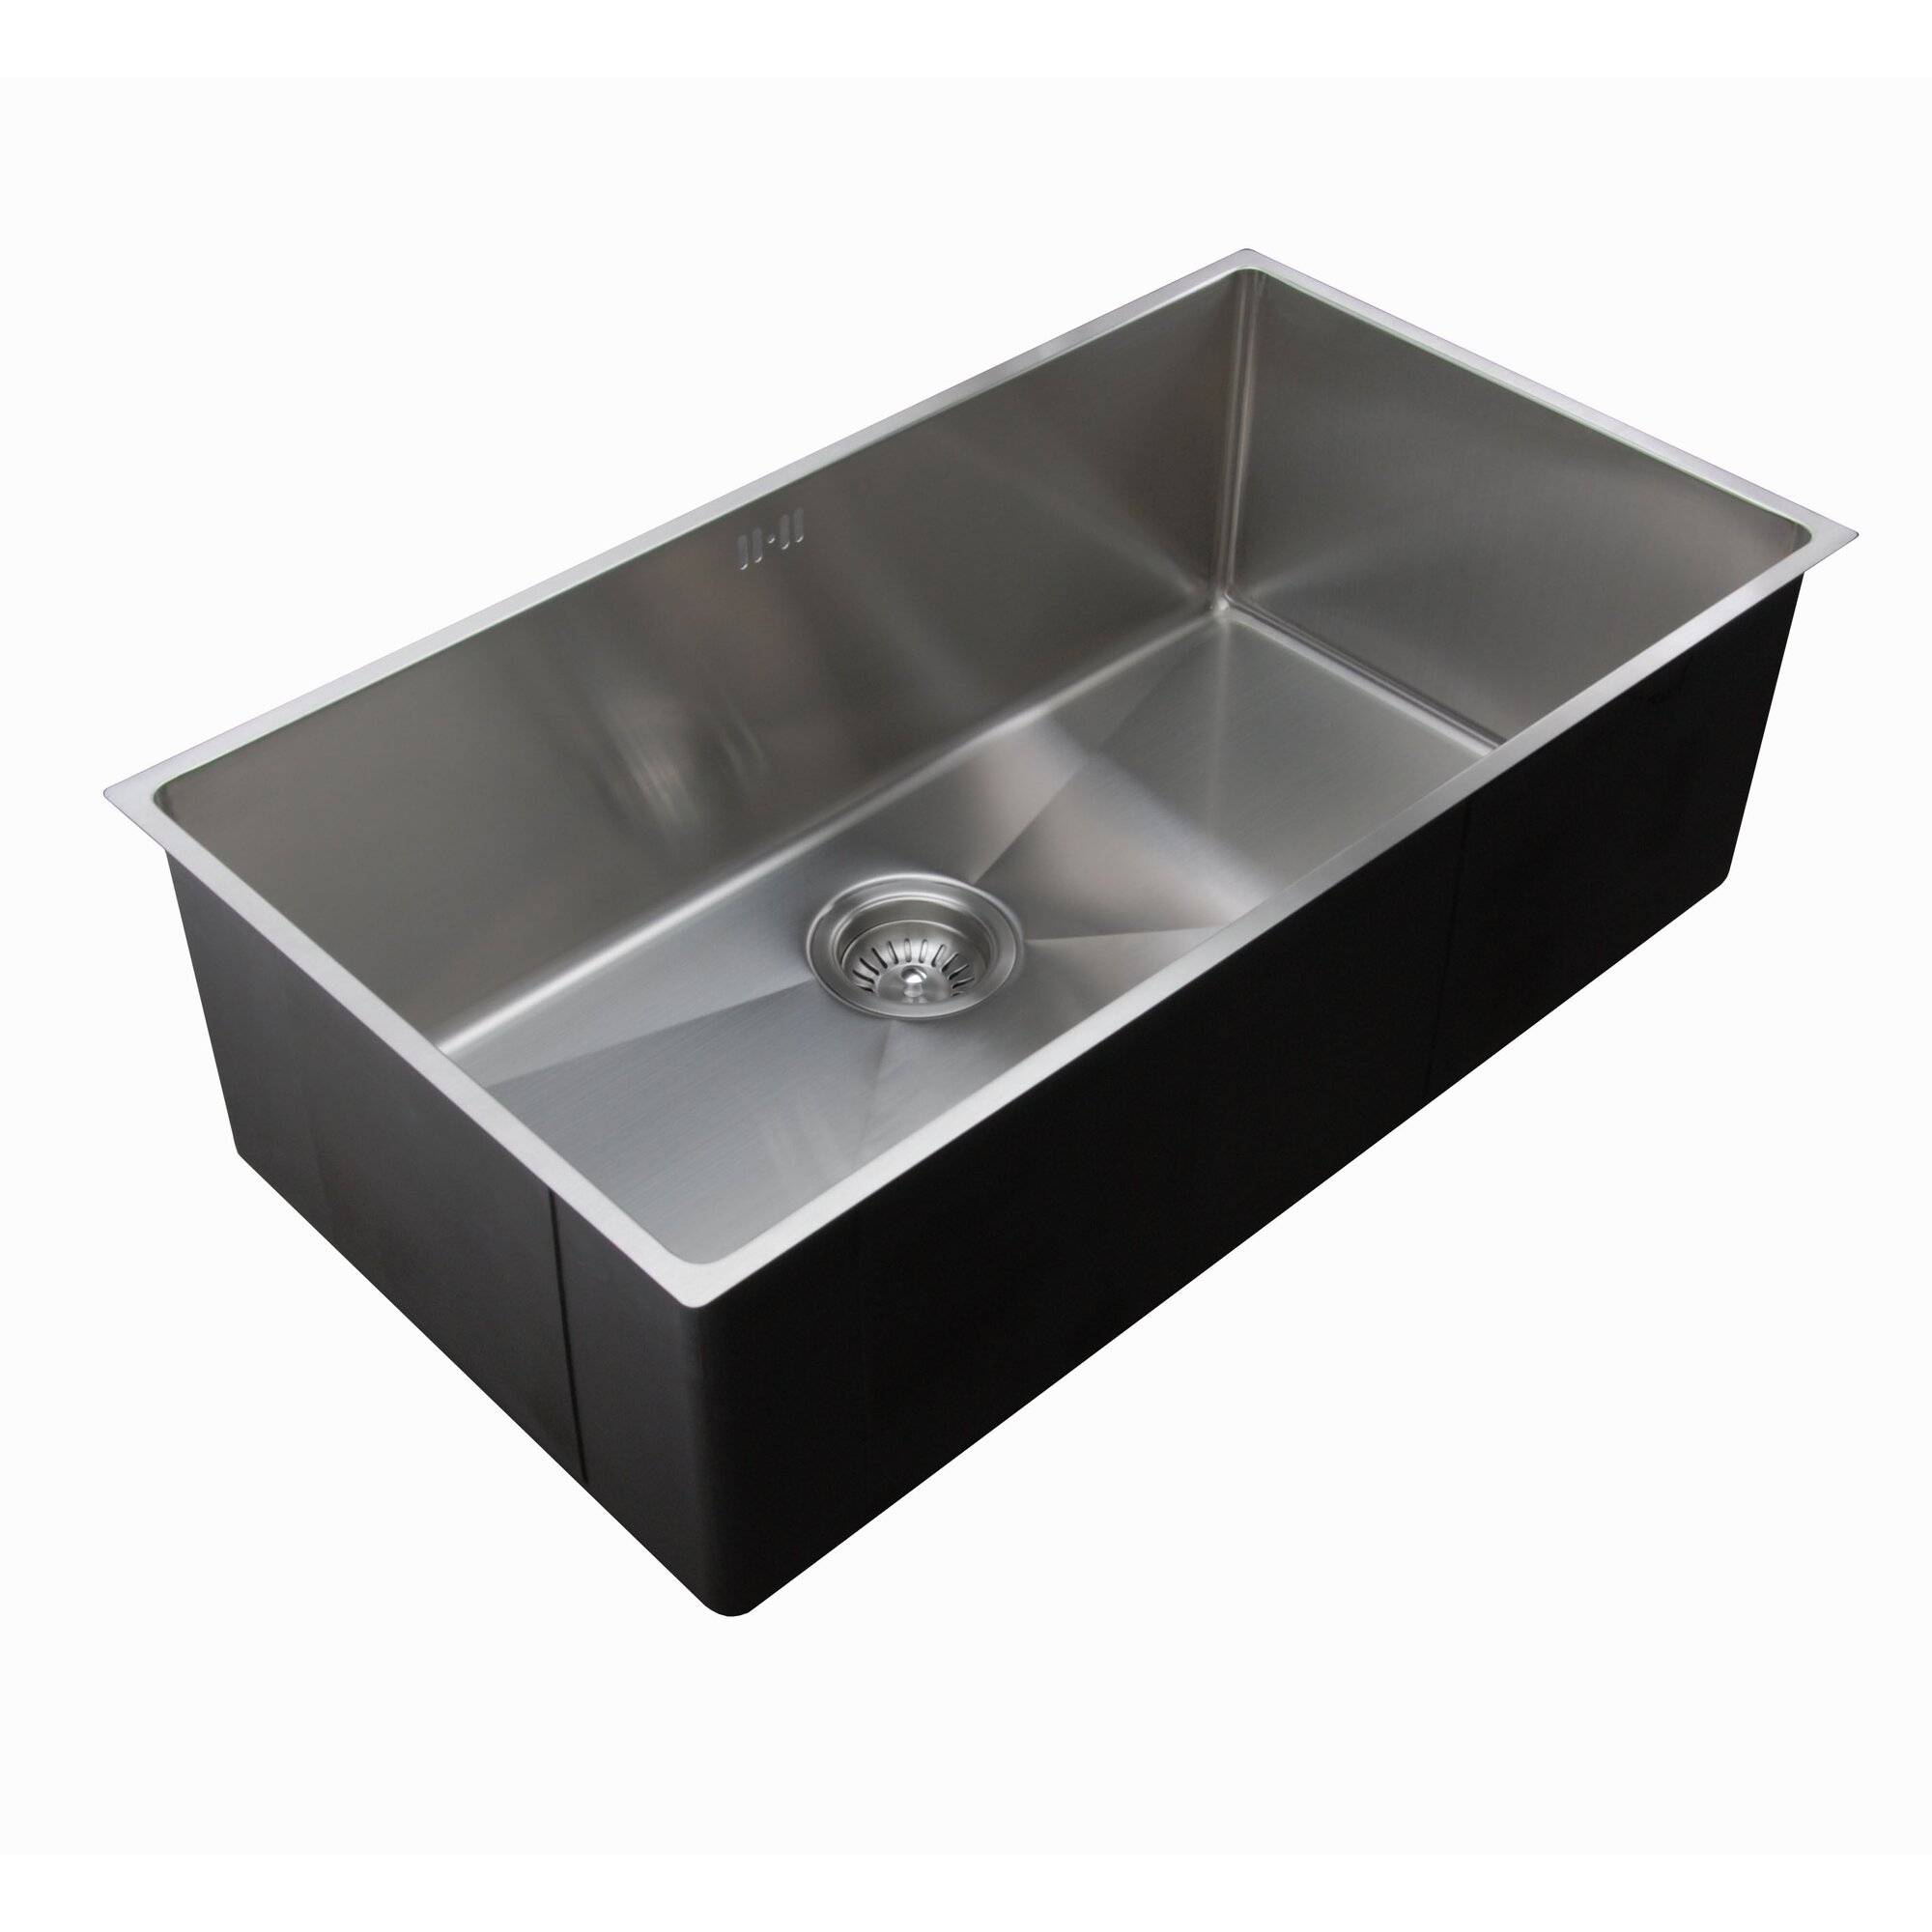 Ukinox 33" x 18" Undermount Single Bowl Stainless Steel Kitchen Sink 33 Inch Stainless Steel Undermount Single Bowl Sink